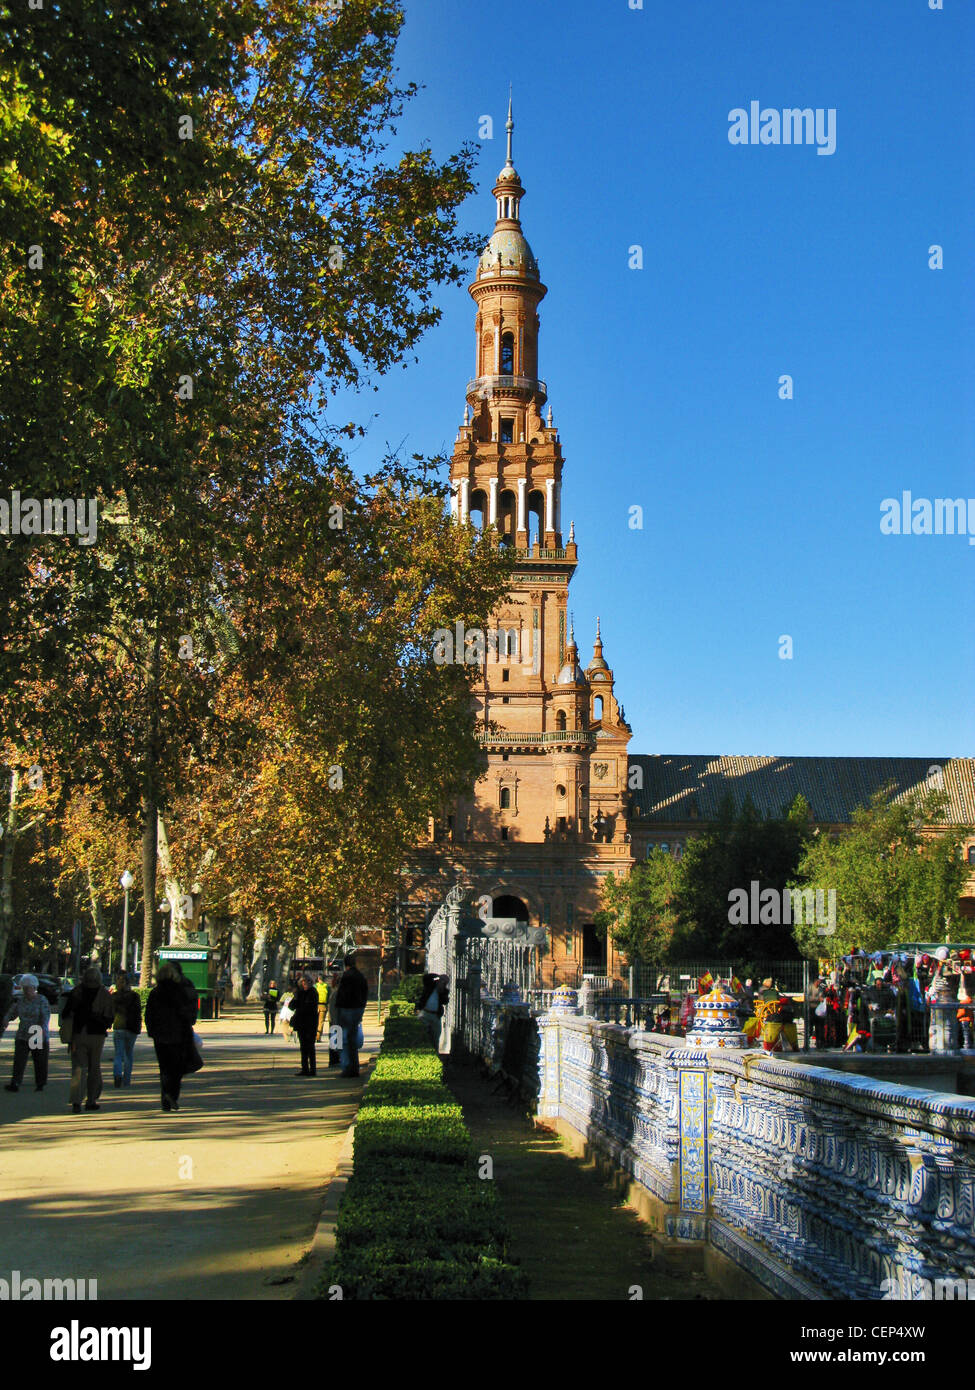 Spain, Seville, Plaza de Espana with trees and parkland Stock Photo